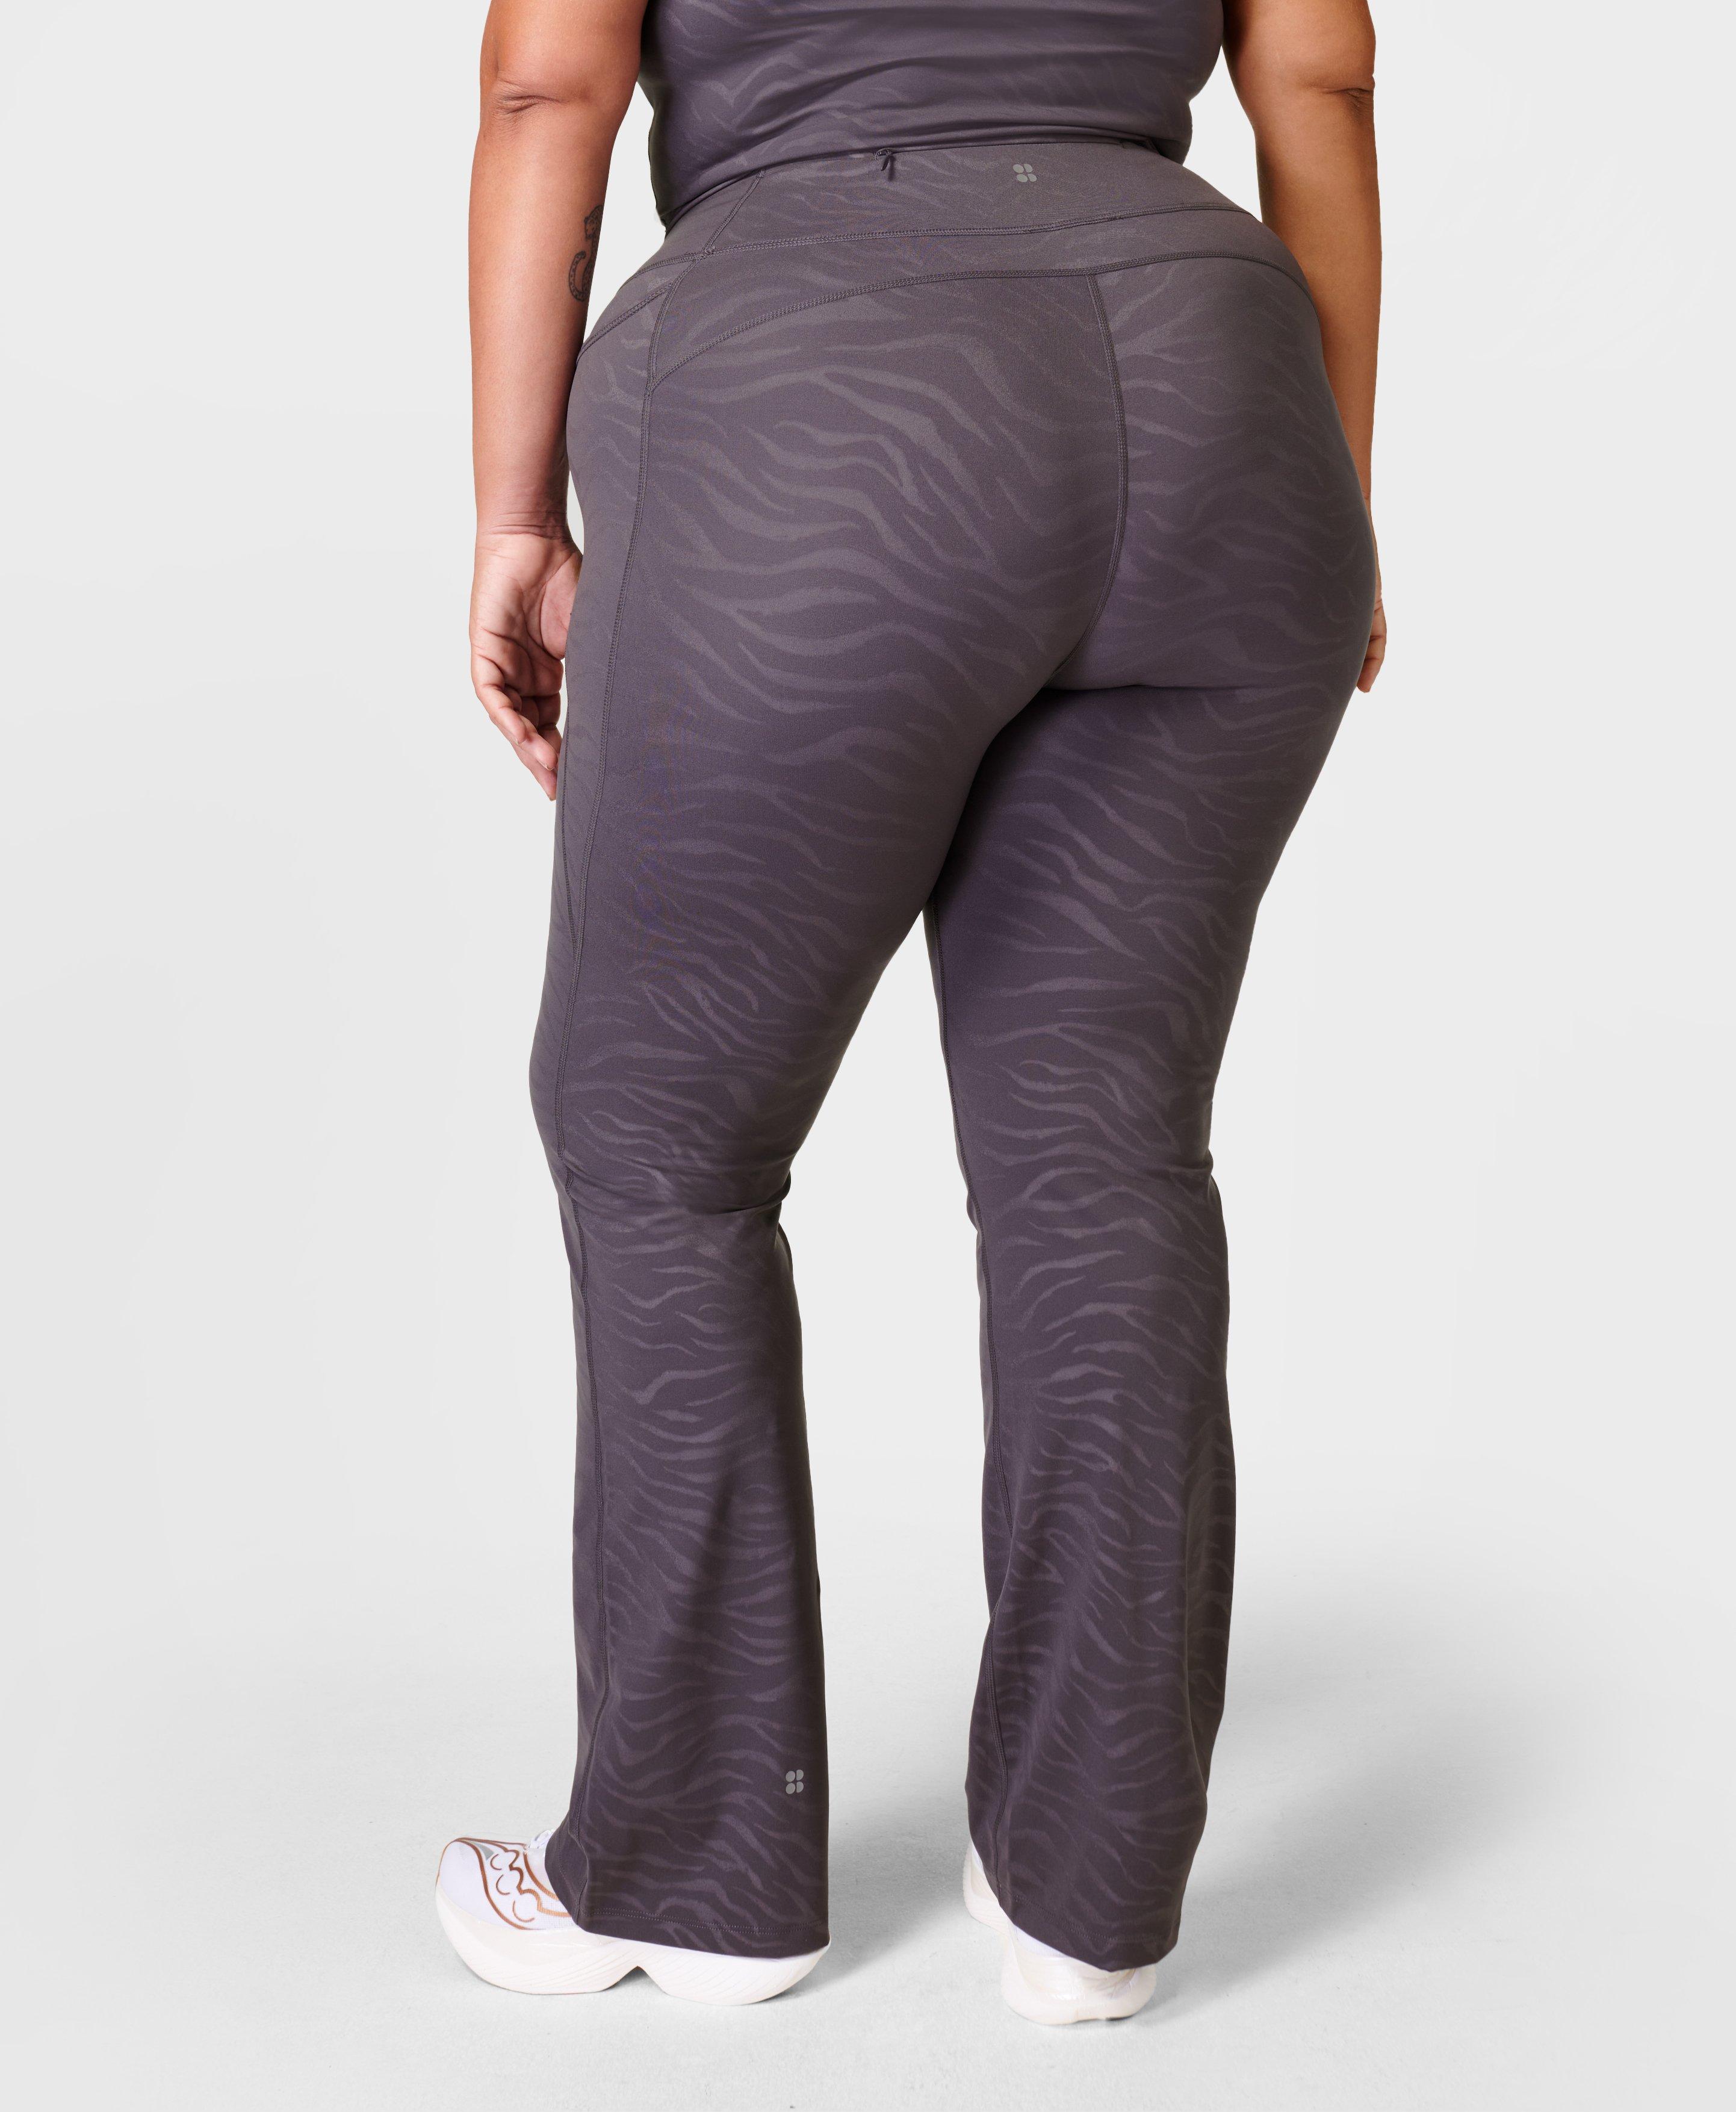 Power Bootcut Workout Pants - 32 INSEAM, Women's Trousers & Yoga Pants